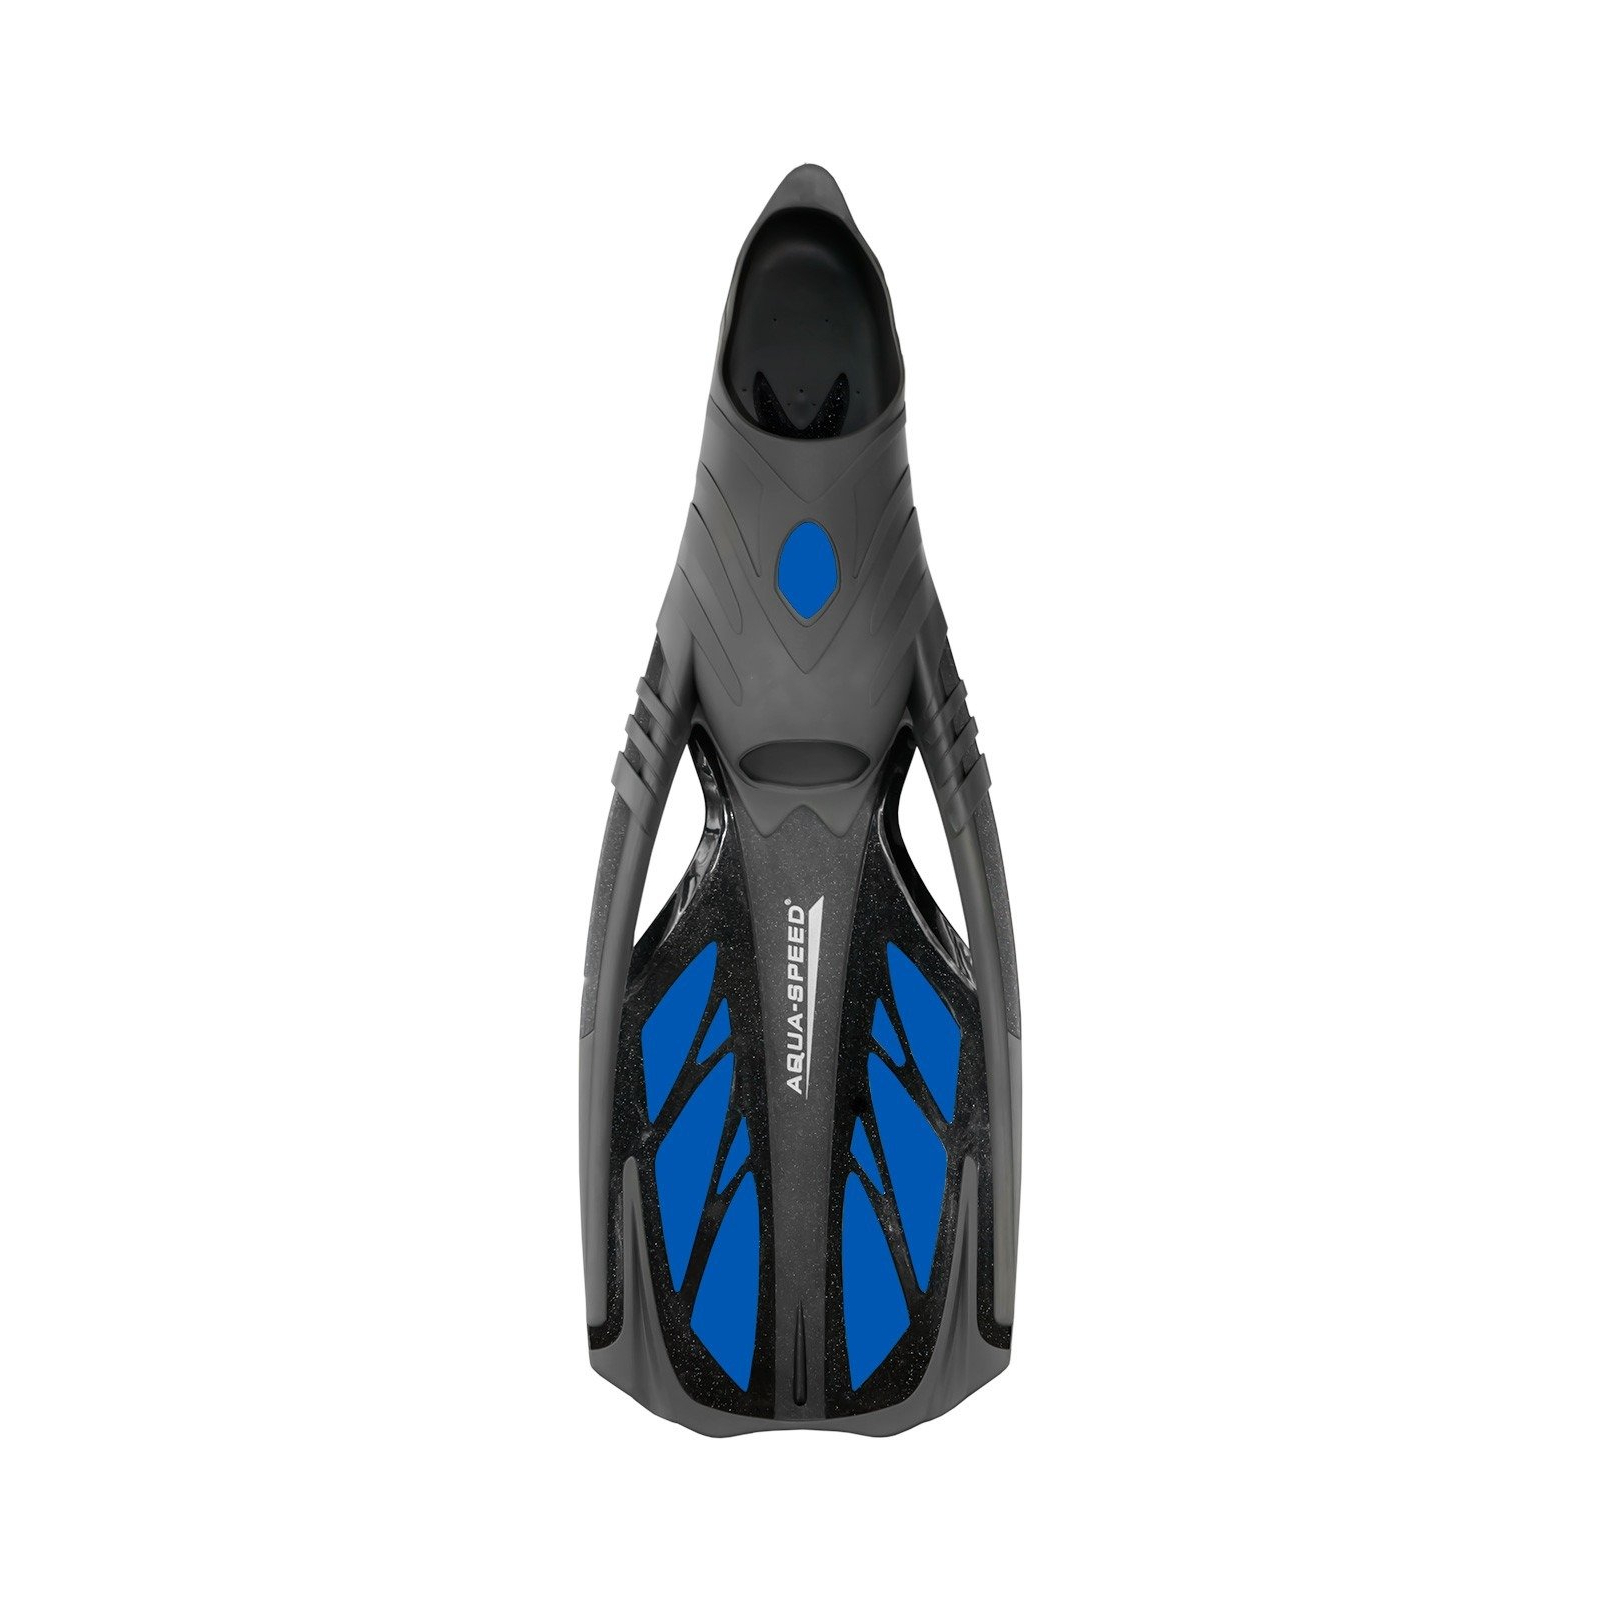 Ласты Aqua Speed Inox 553-11 5117 синій, чорний, сірий 46-47 (5908217651174) изображение 3